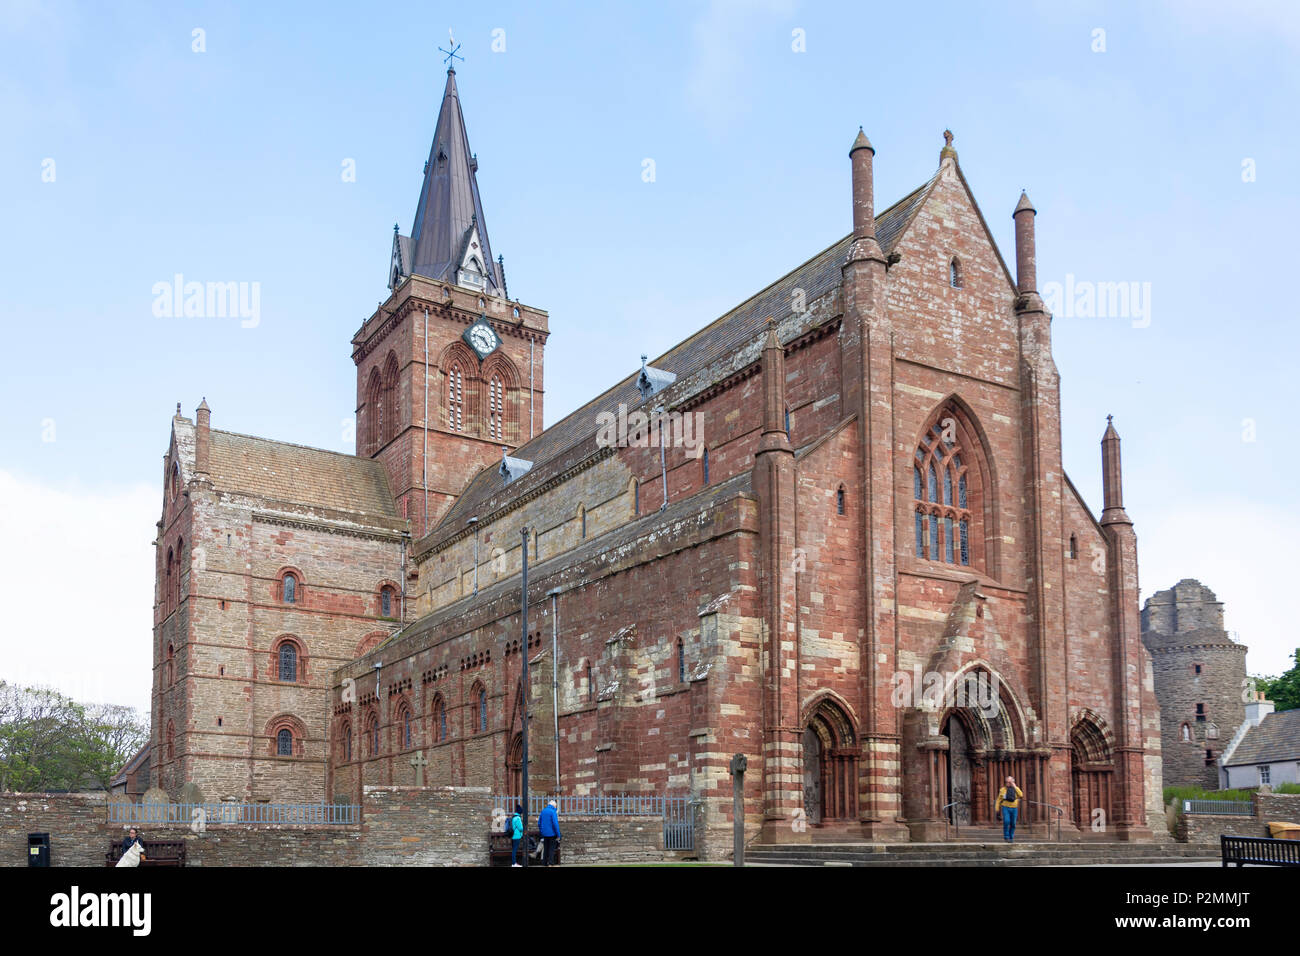 St Magnus Cathedral, Broad Street, Kirkwall, le continent, les îles Orcades, îles du Nord, Ecosse, Royaume-Uni Banque D'Images